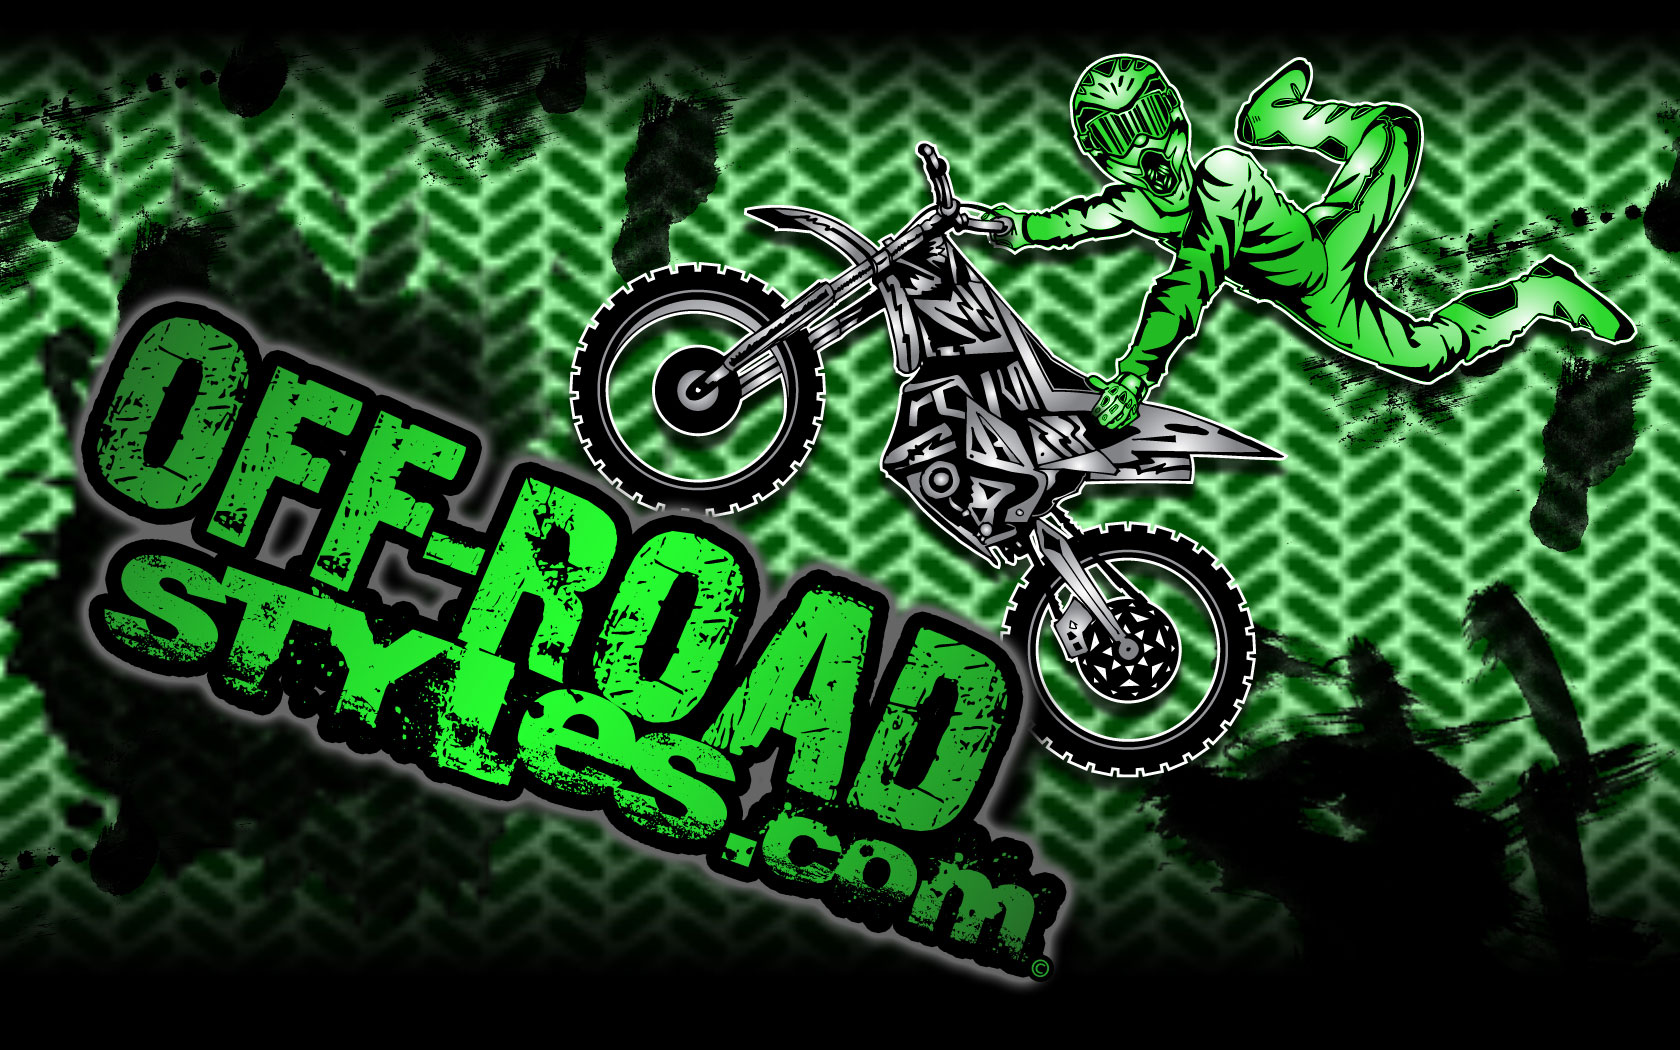 off wallpaper,green,motocross,freestyle motocross,font,text